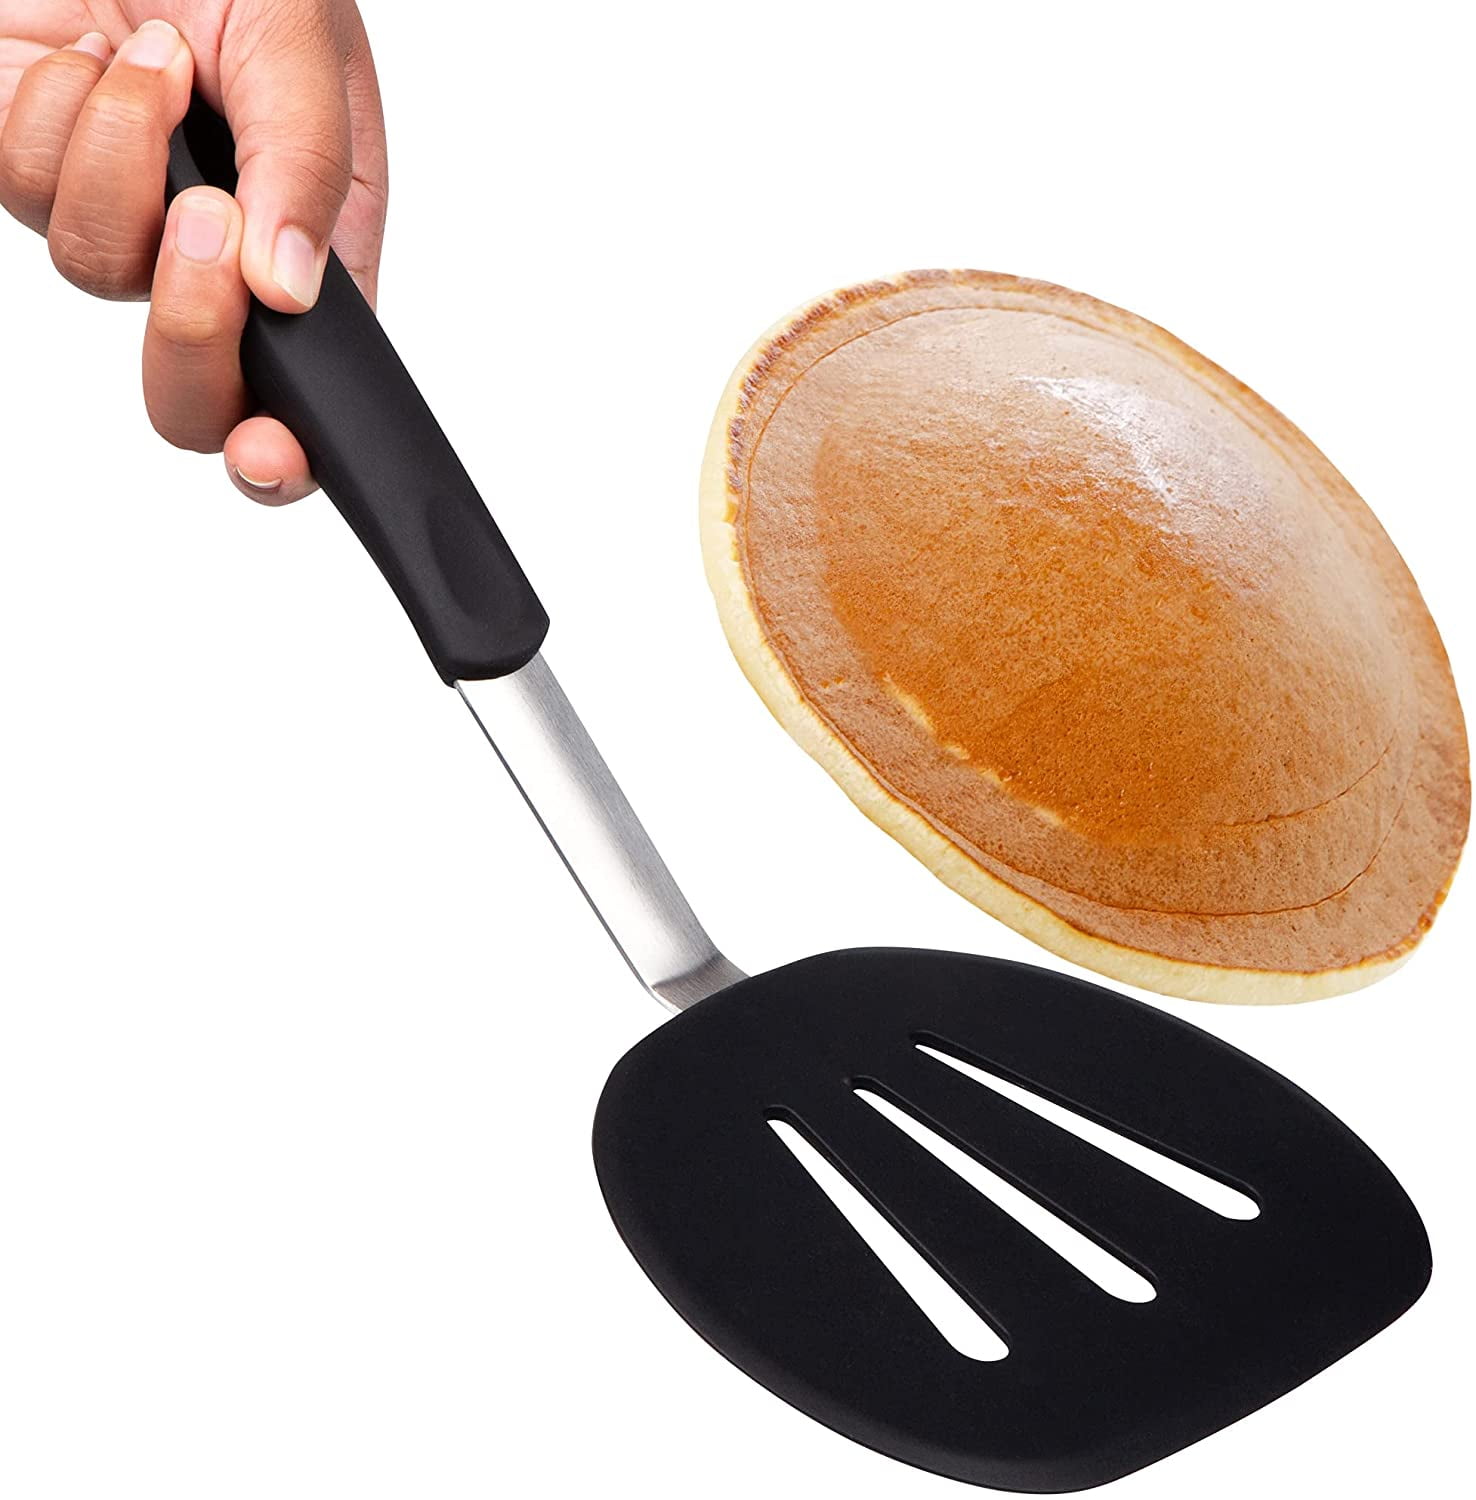 Pancake Spatula Silicone Turner for Nonstick Cookware. Flexible